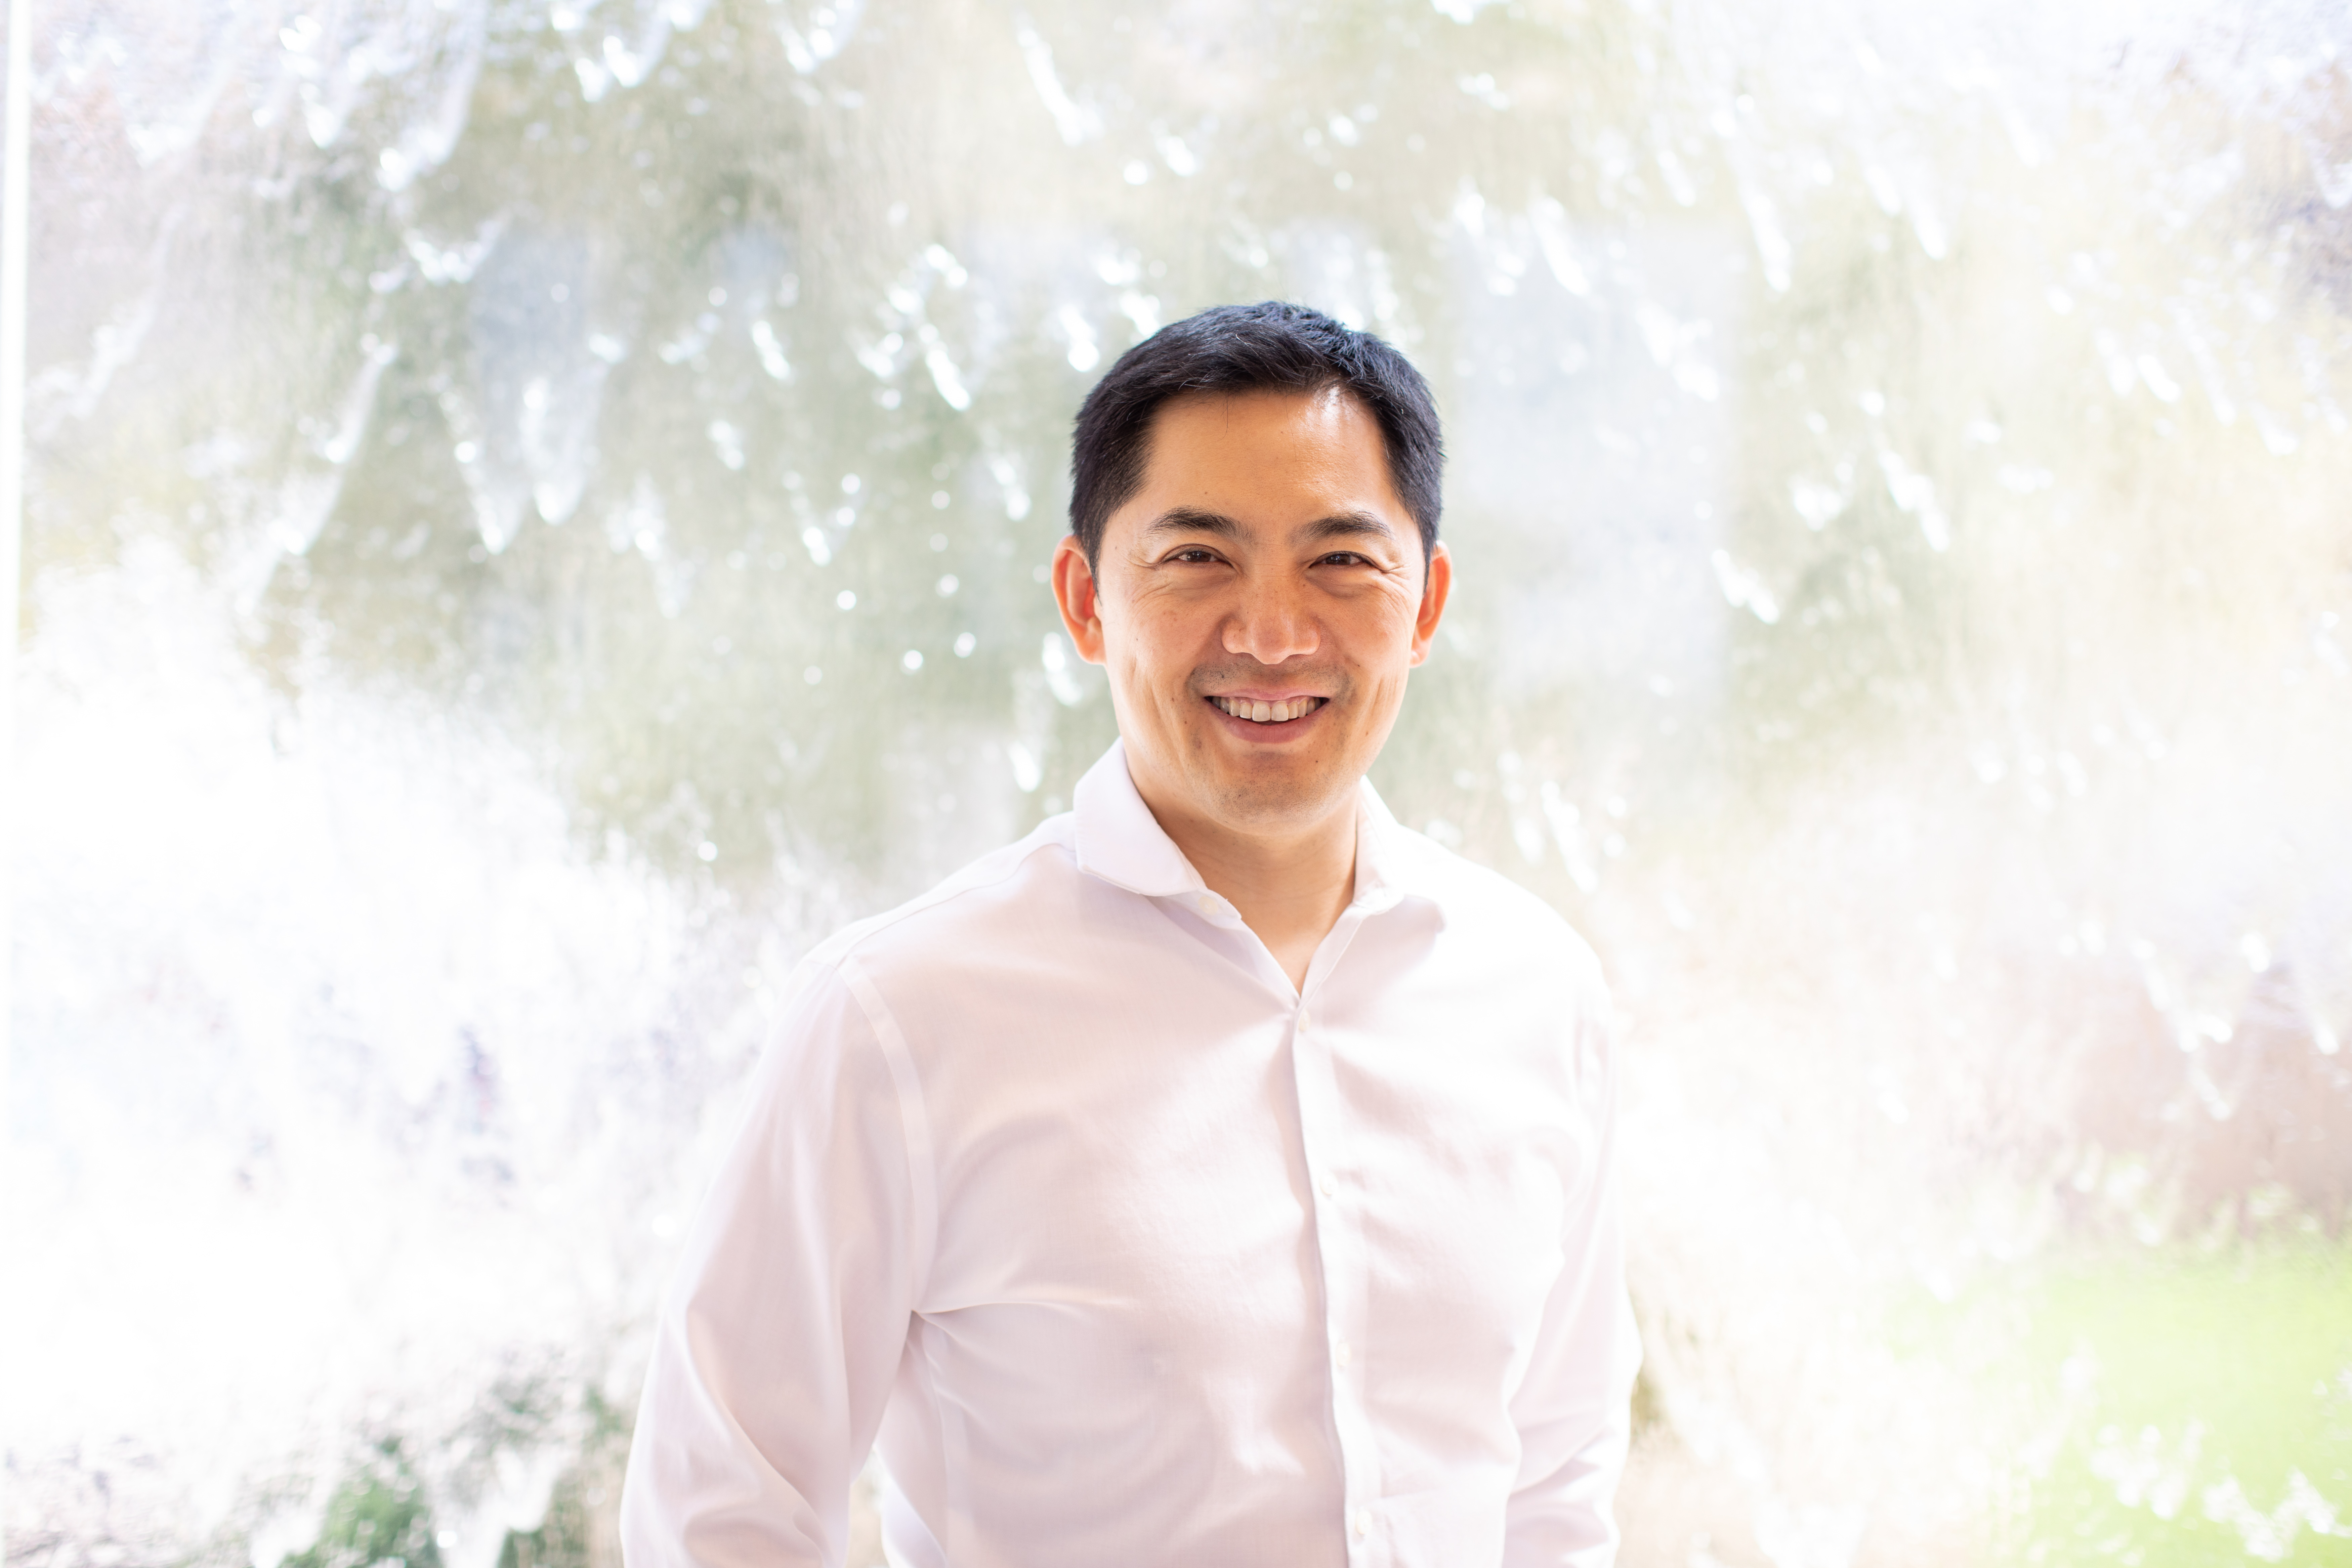 David Wang, Bet.Works CEO